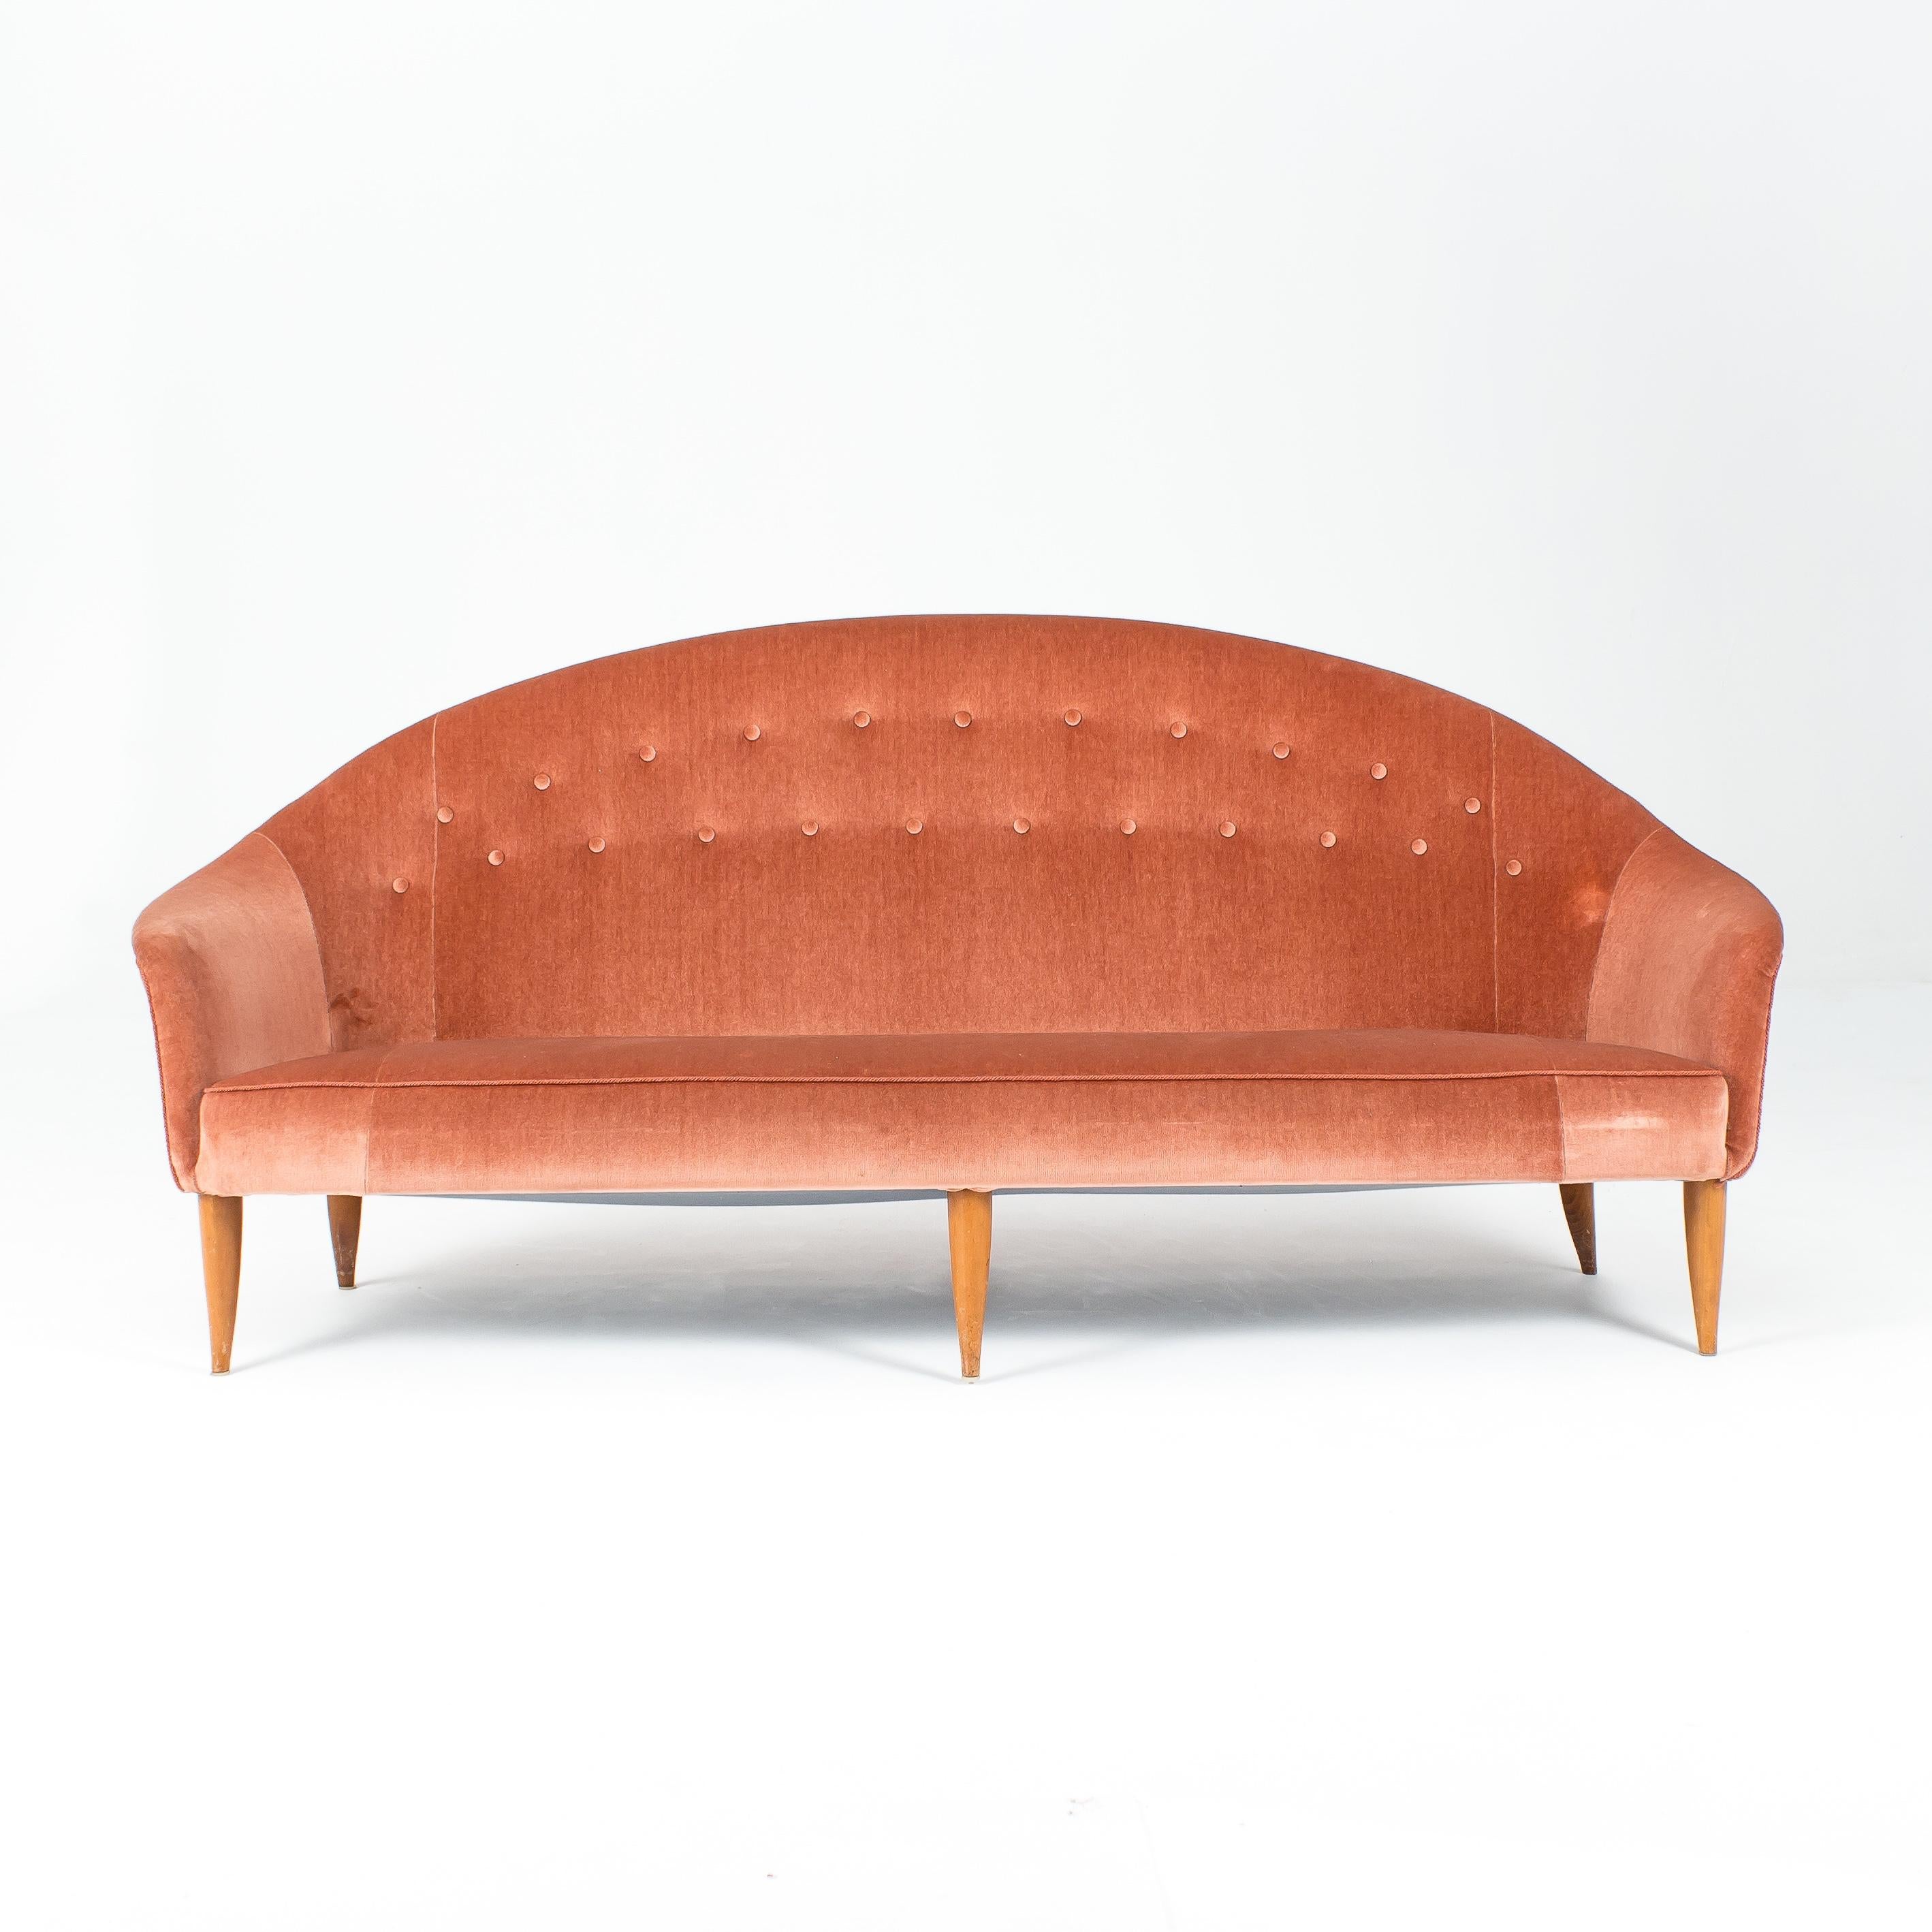 A large three-seat 'Paradise' sofa in its original pink mohair velvet upholstery.

Designed for Nordiska Kompaniet. 

Sweden, circa 1960s.